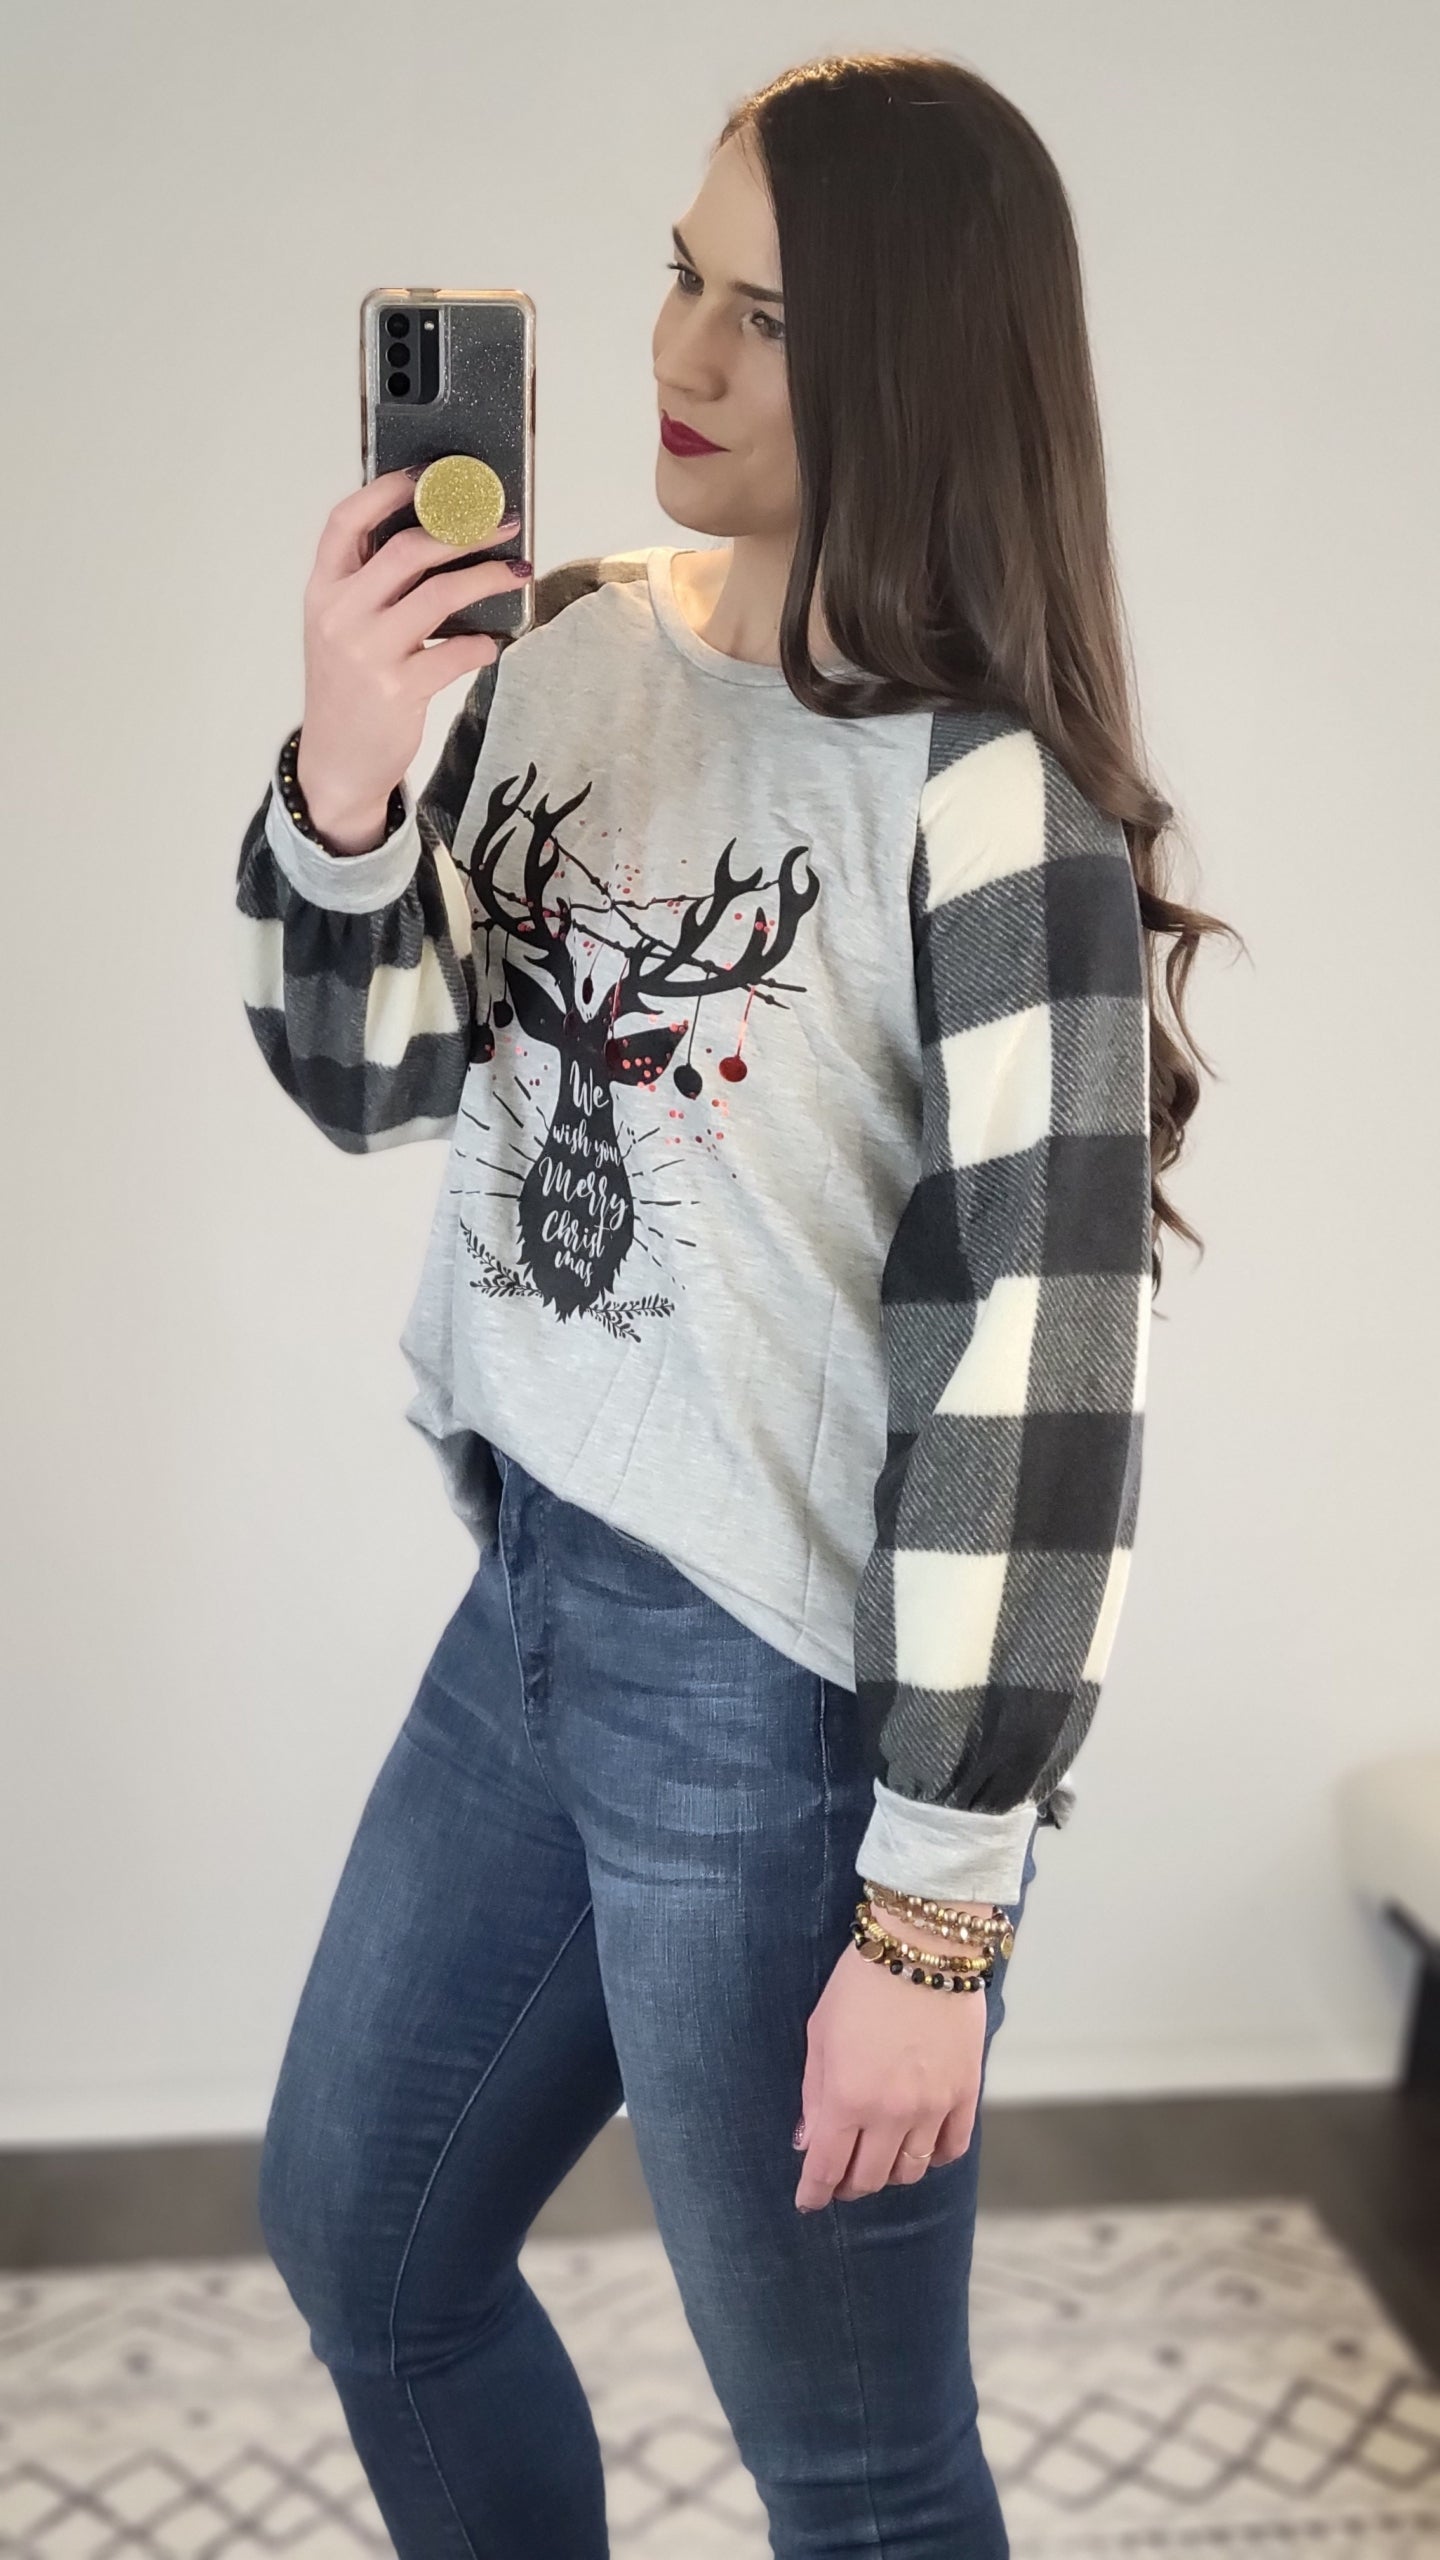 Buffalo Plaid Reindeer Christmas Long Sleeve Top "Christy"